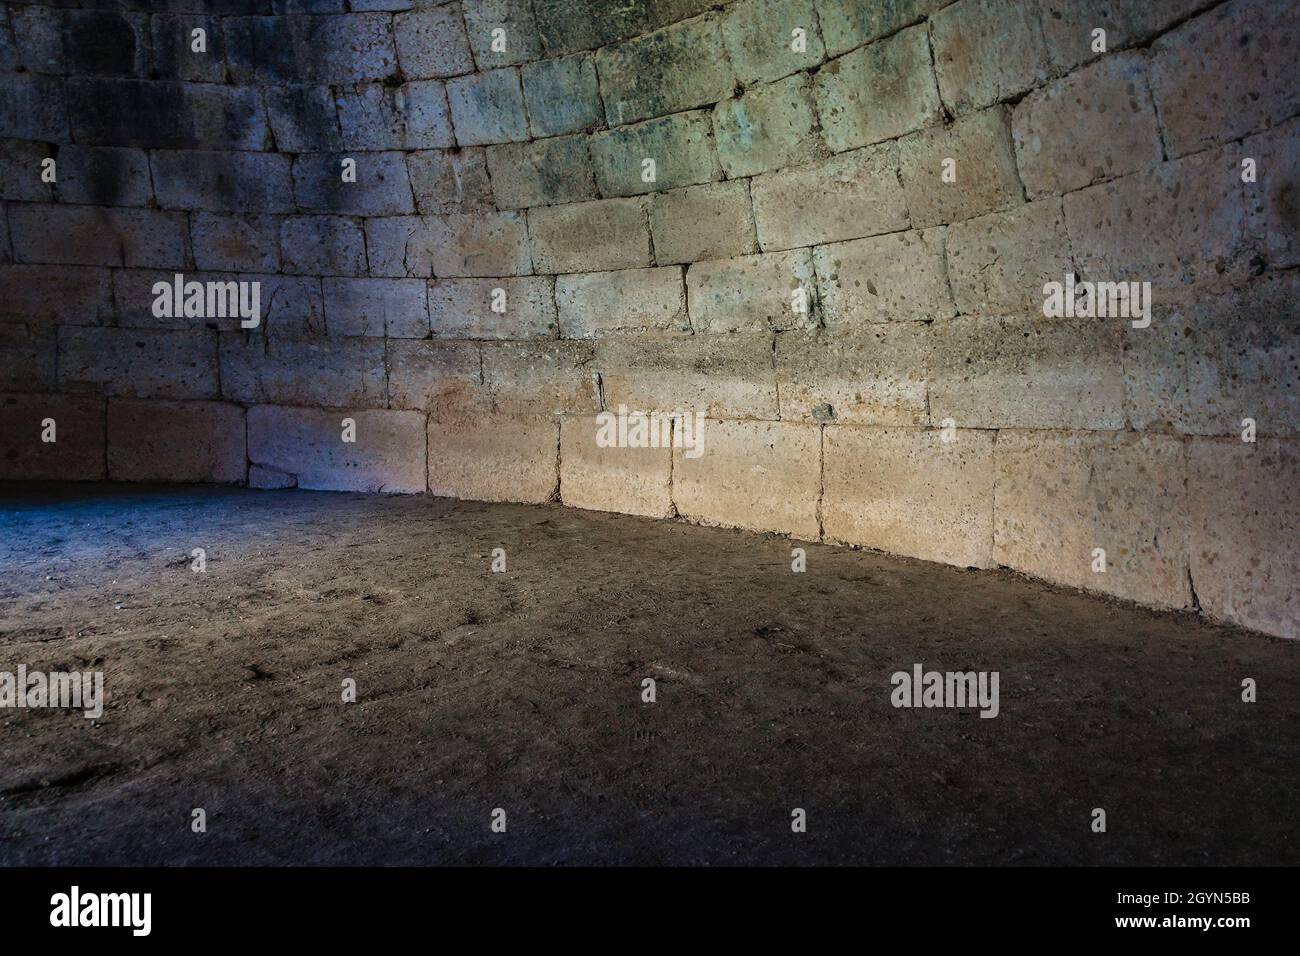 Interior view of famous agamemnon tomb, micenas zone, greece Stock Photo